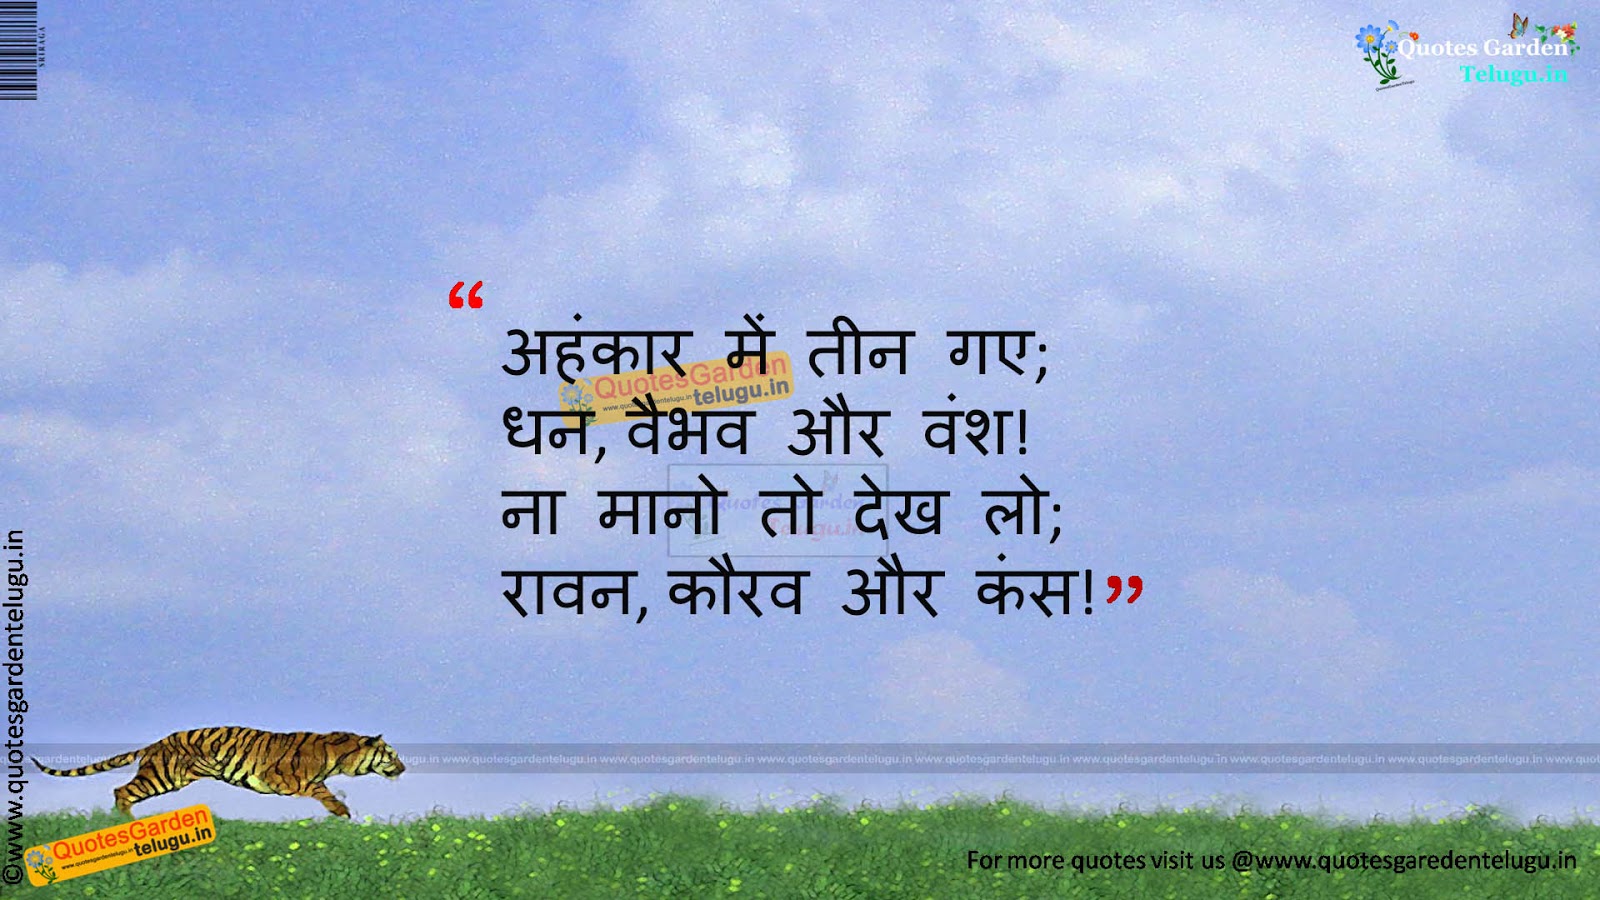 Best inspirtional quotes in hindi 1154 | QUOTES GARDEN TELUGU | Telugu